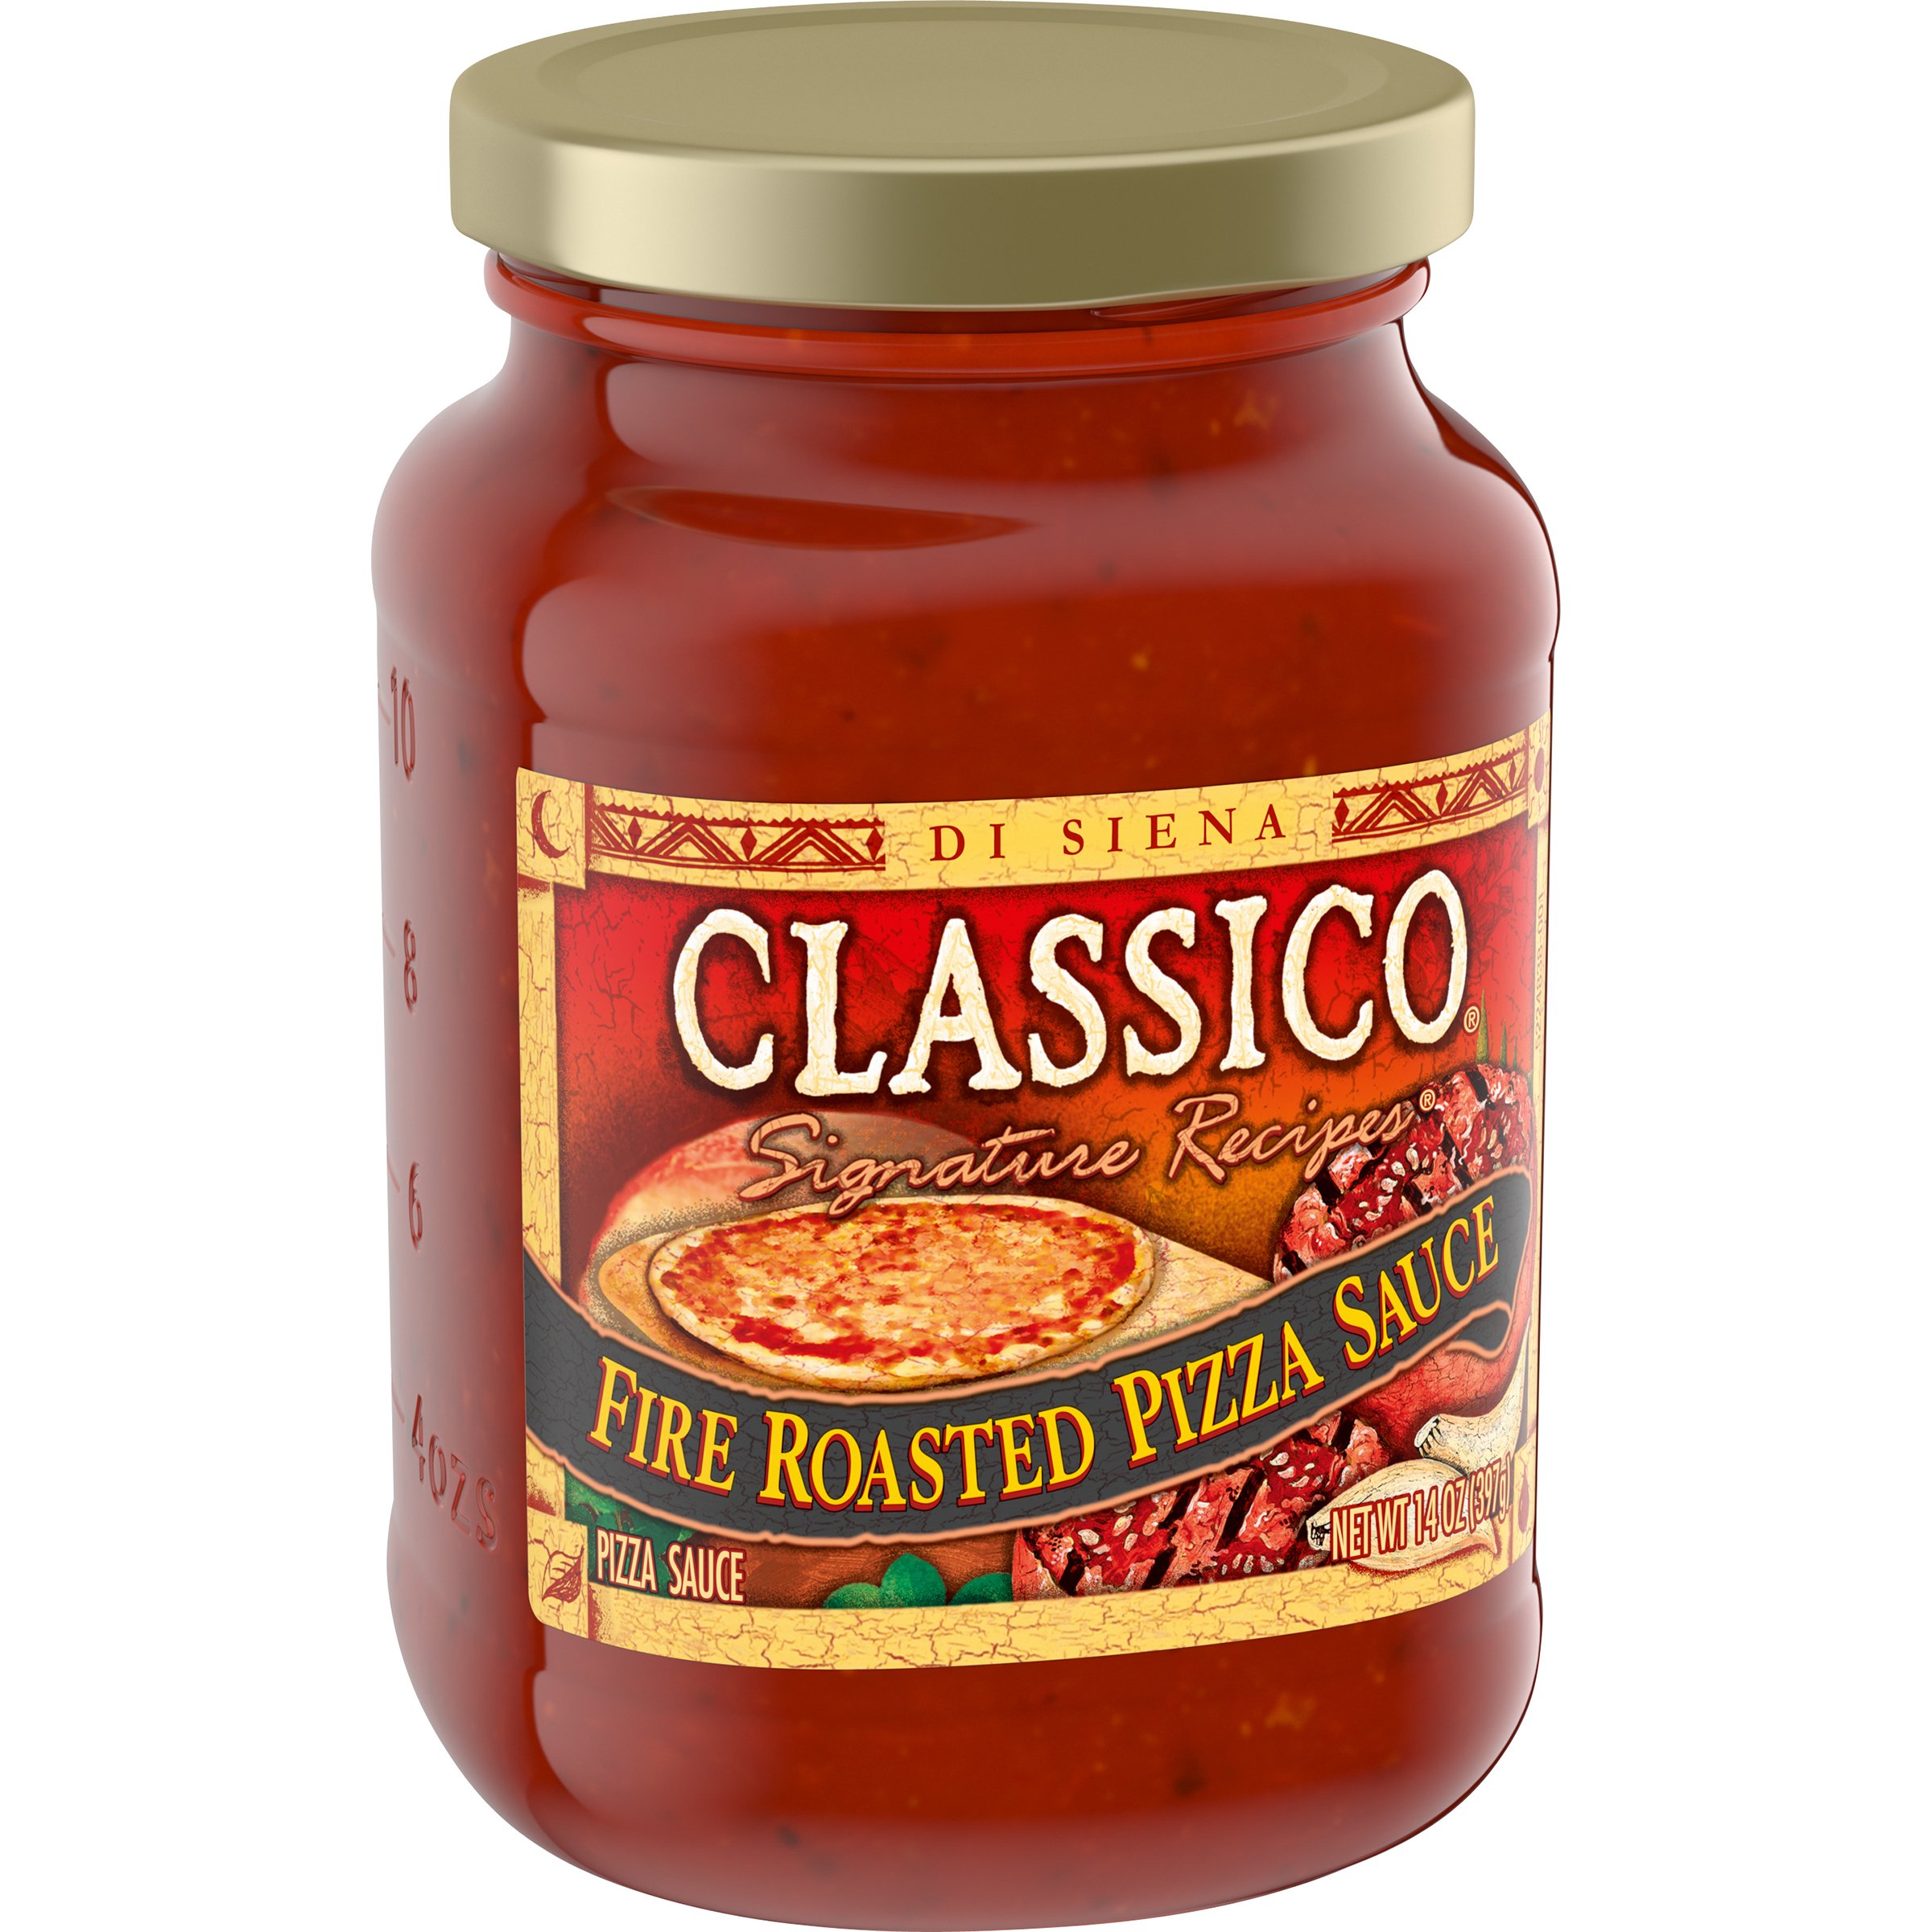 Classico Fire Roasted Pizza Sauce, 14 oz Jar